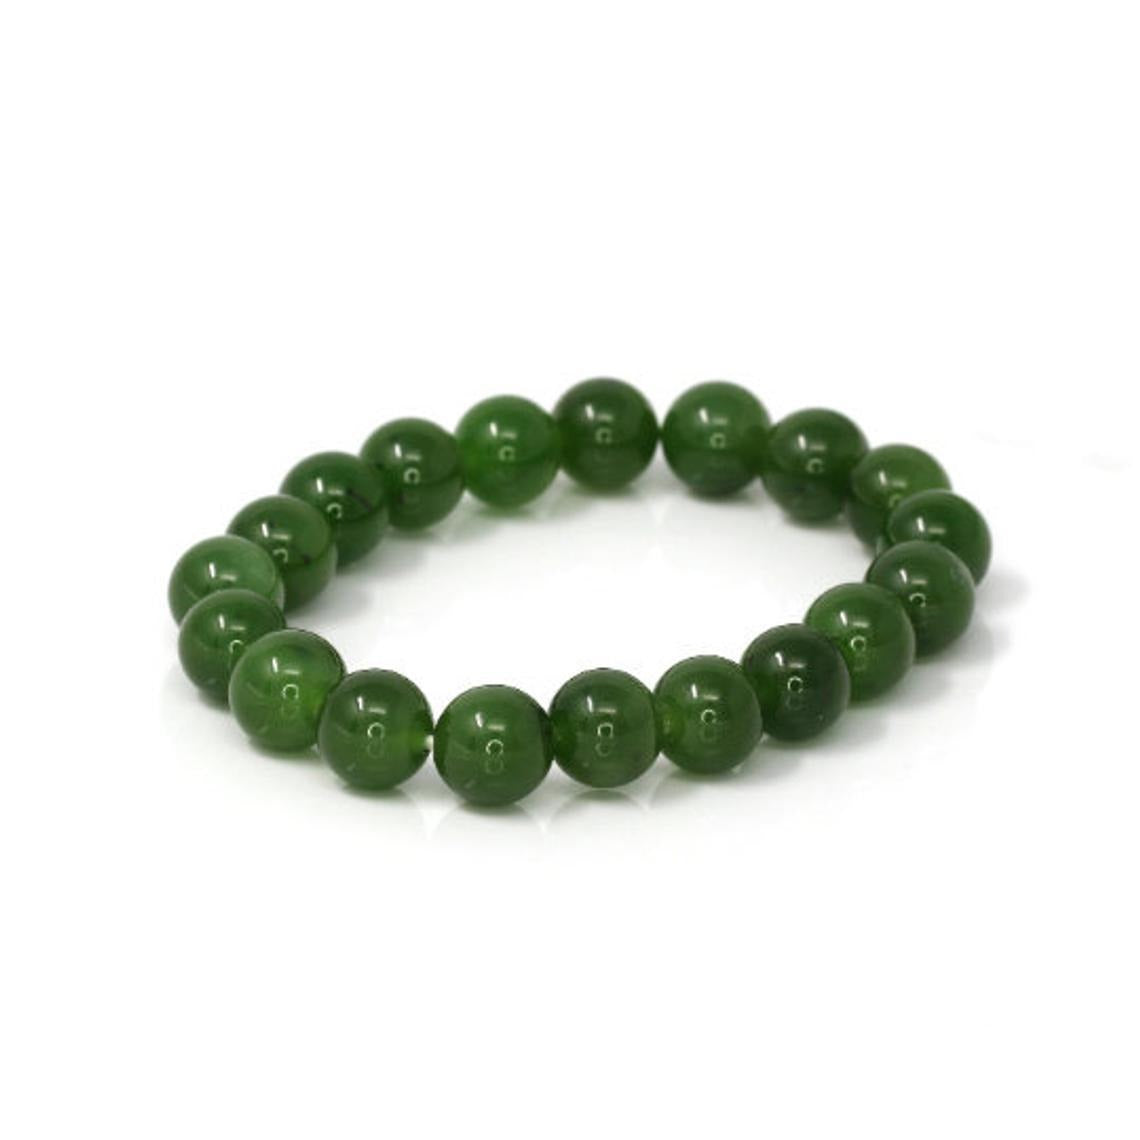 Genuine Green Jade Round Beads Bracelet Bangle ( 9.5 mm ) | Jade Jewelry, Nephrite Jade Jewelry | RealJade, authenticity Is Timeless 6.5 Inches